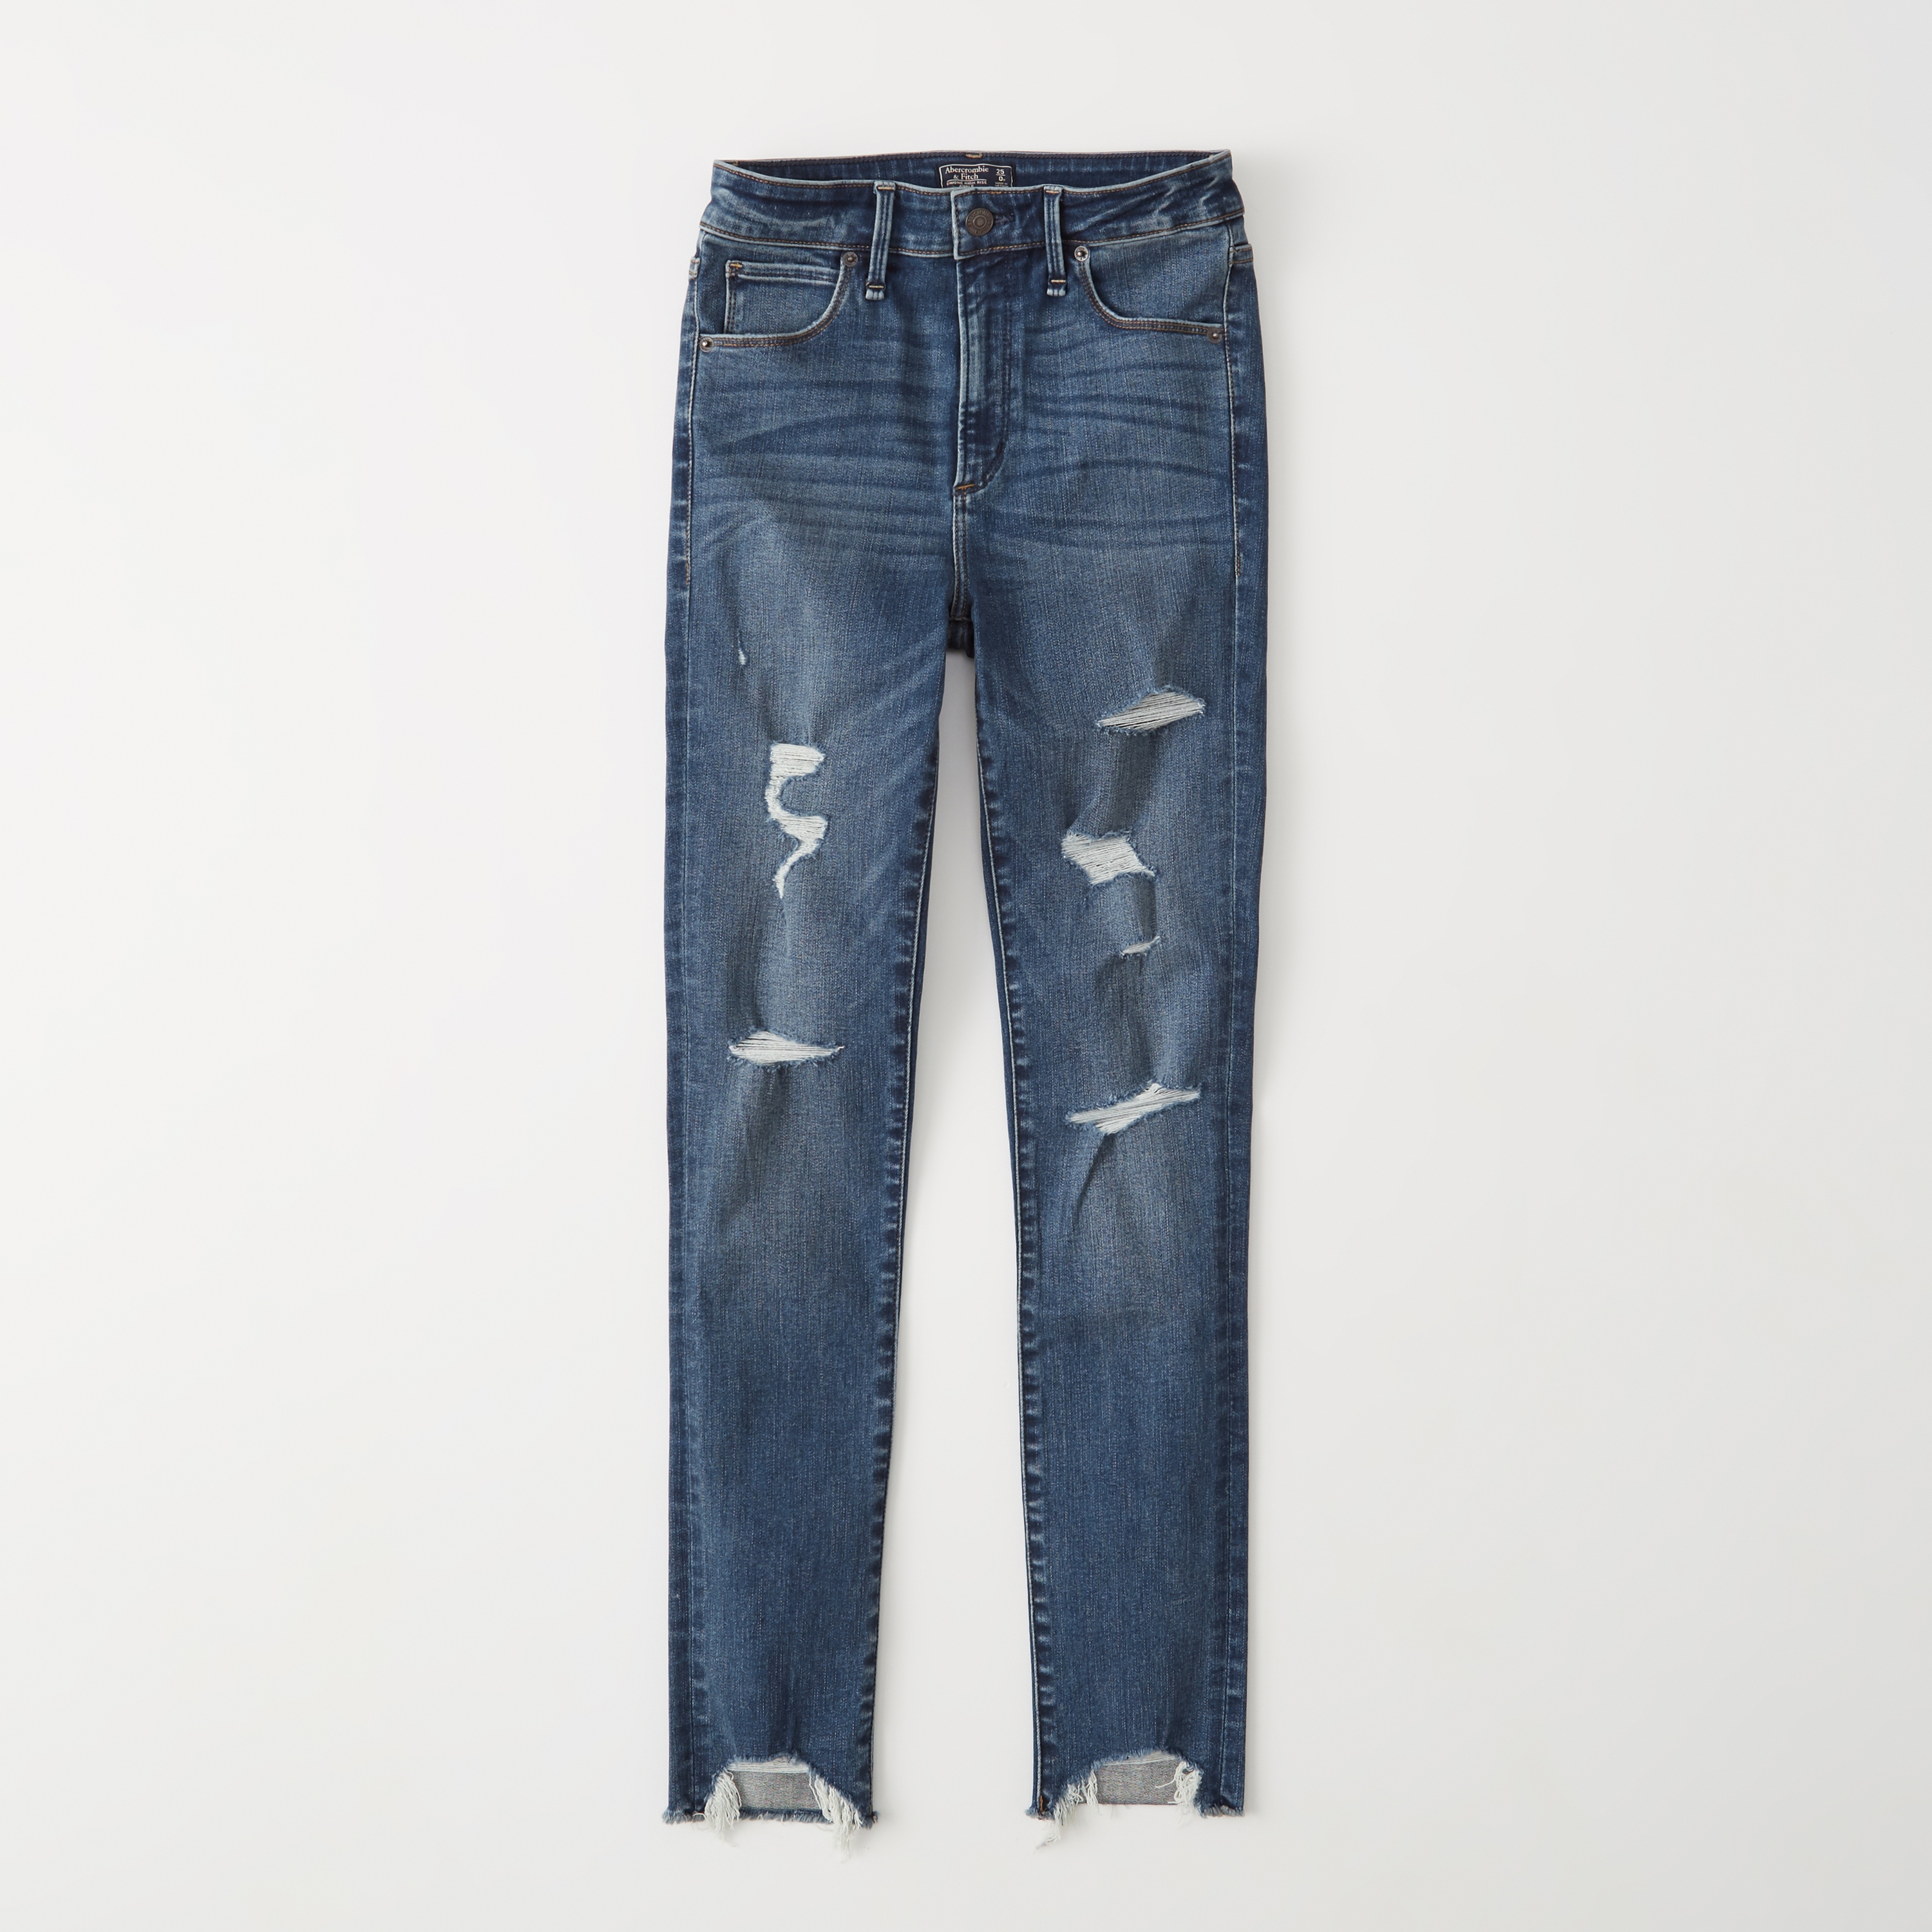 crop top design with jeans